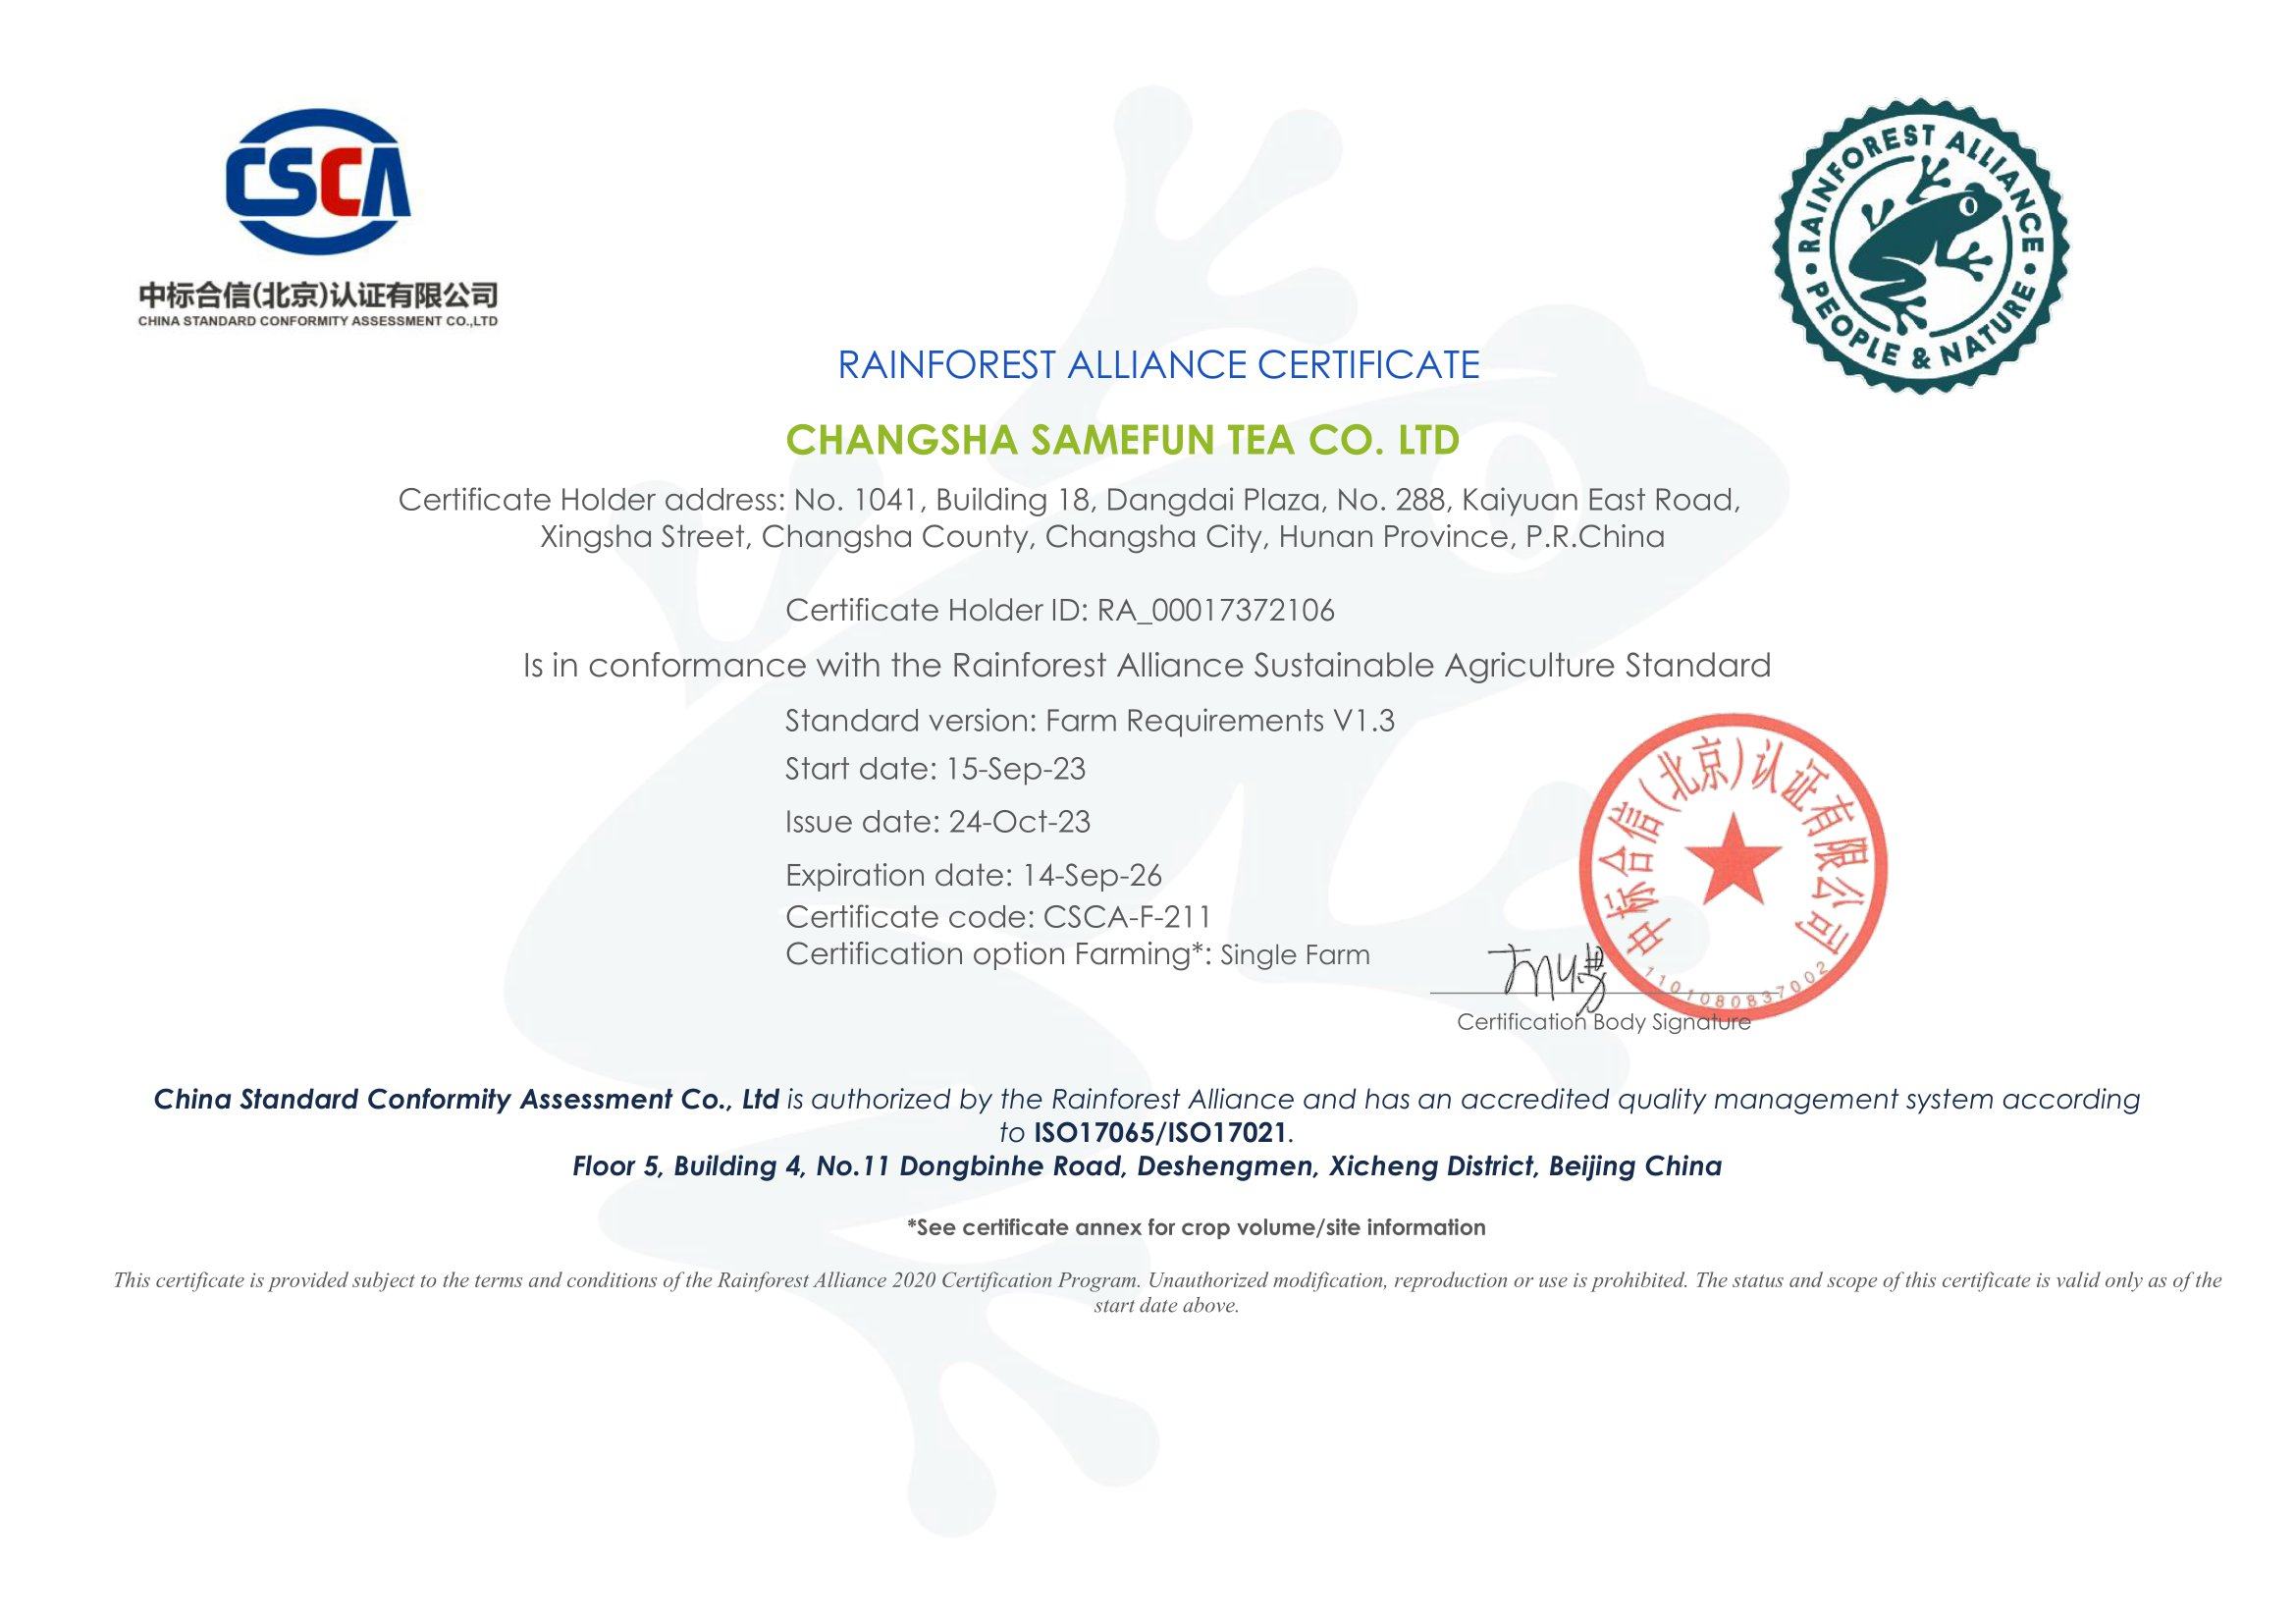 Rainforest Alliance certificate